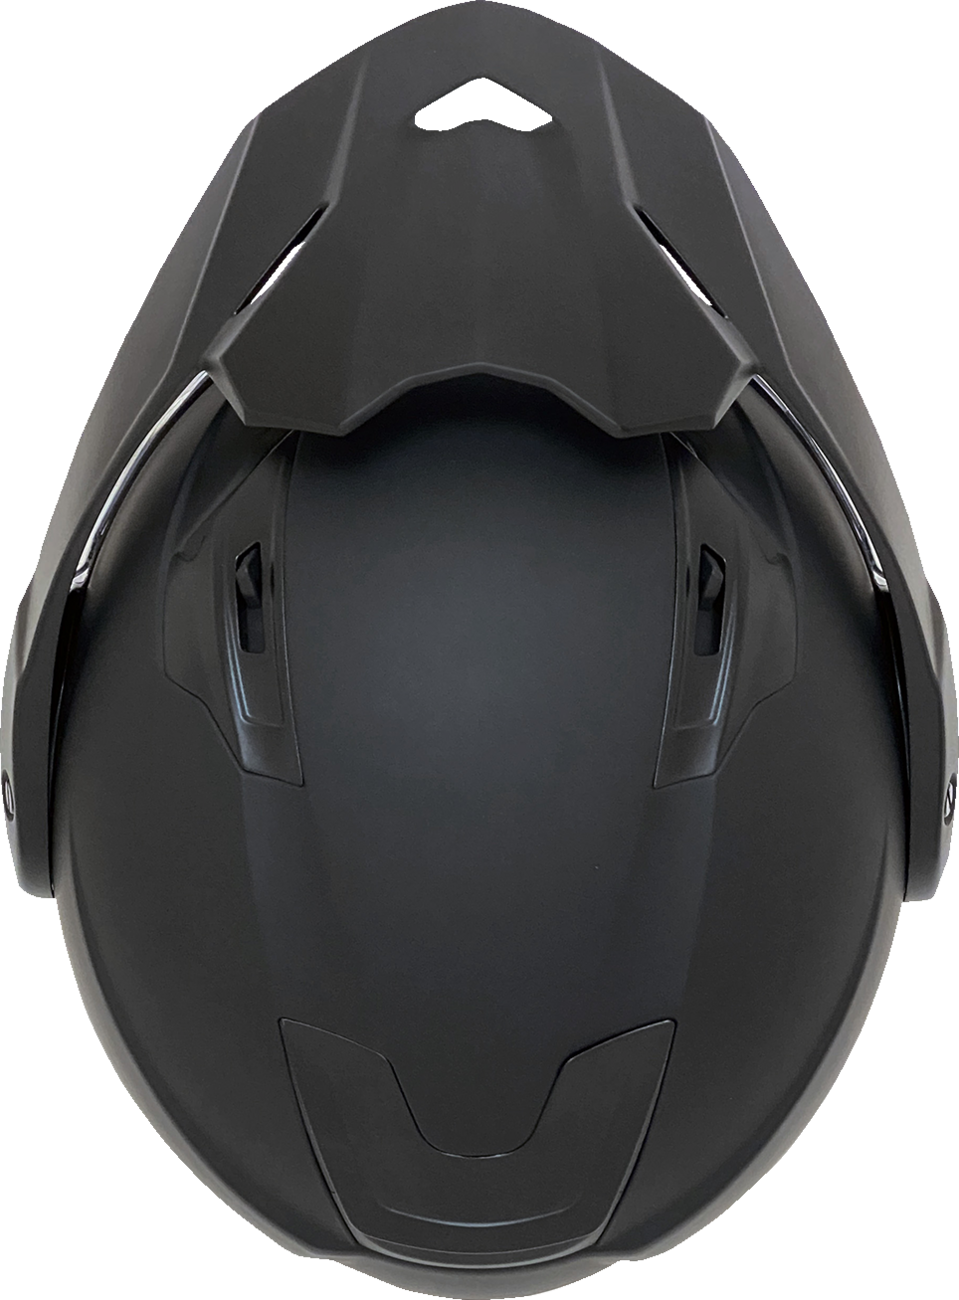 AFX FX-111DS Helmet - Matte Black - Small 0140-0121